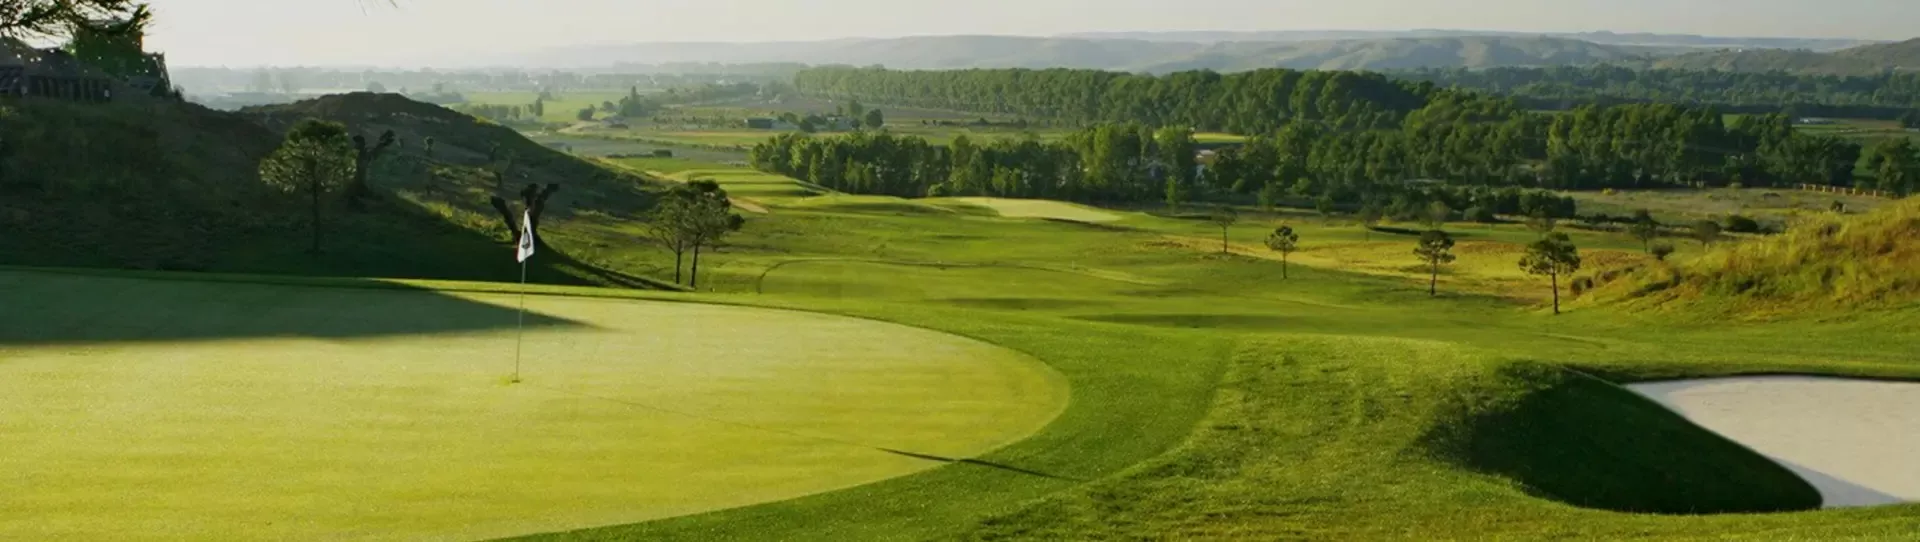 Spain golf courses - Club de Golf Aranjuez - Photo 2